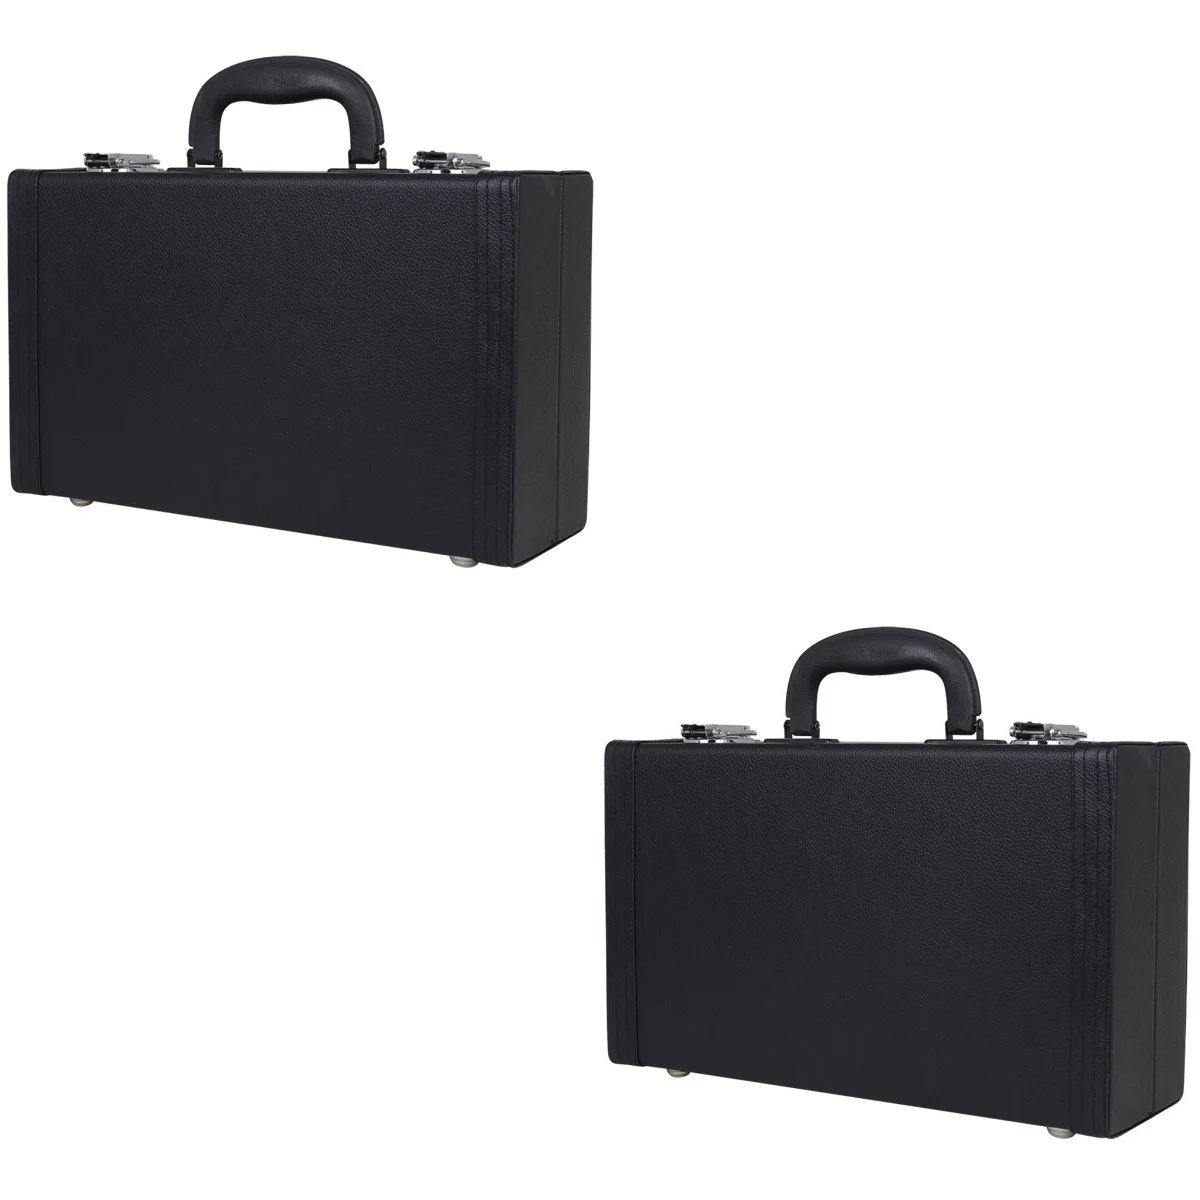 2x Clarinet Holder Bag Clarinet Case Clarinet PU Bag Padded Clarinet Case Clarinet Storage Bag Shockproof Clarinet Box enlarge